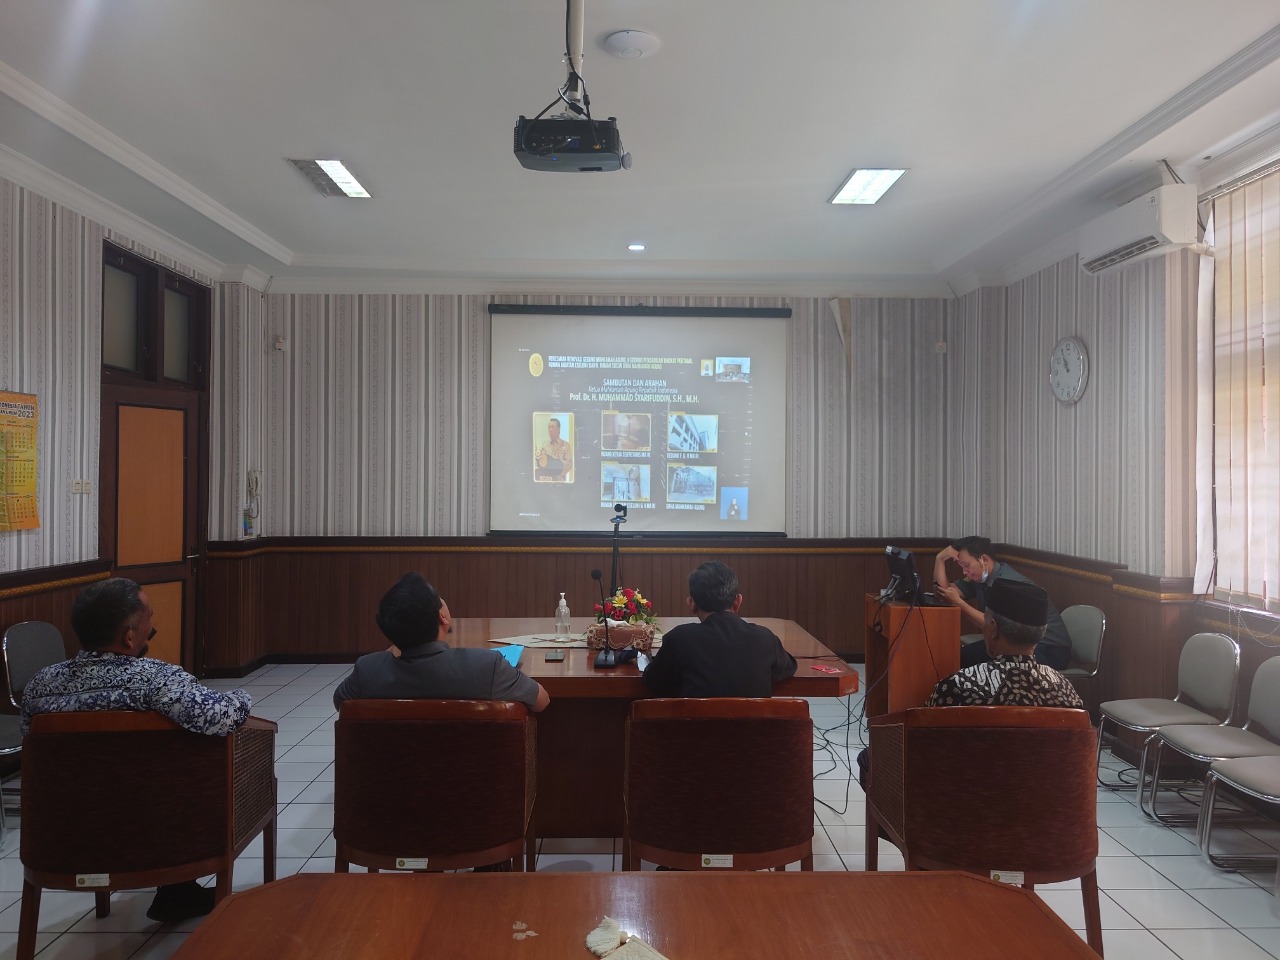 Pengadilan Negeri Yogyakarta Mengikuti Kegiatan Peresmian Pembangunan dan Renovasi Gedung/Bangunan di Lingkungan Mahkamah Agung RI 